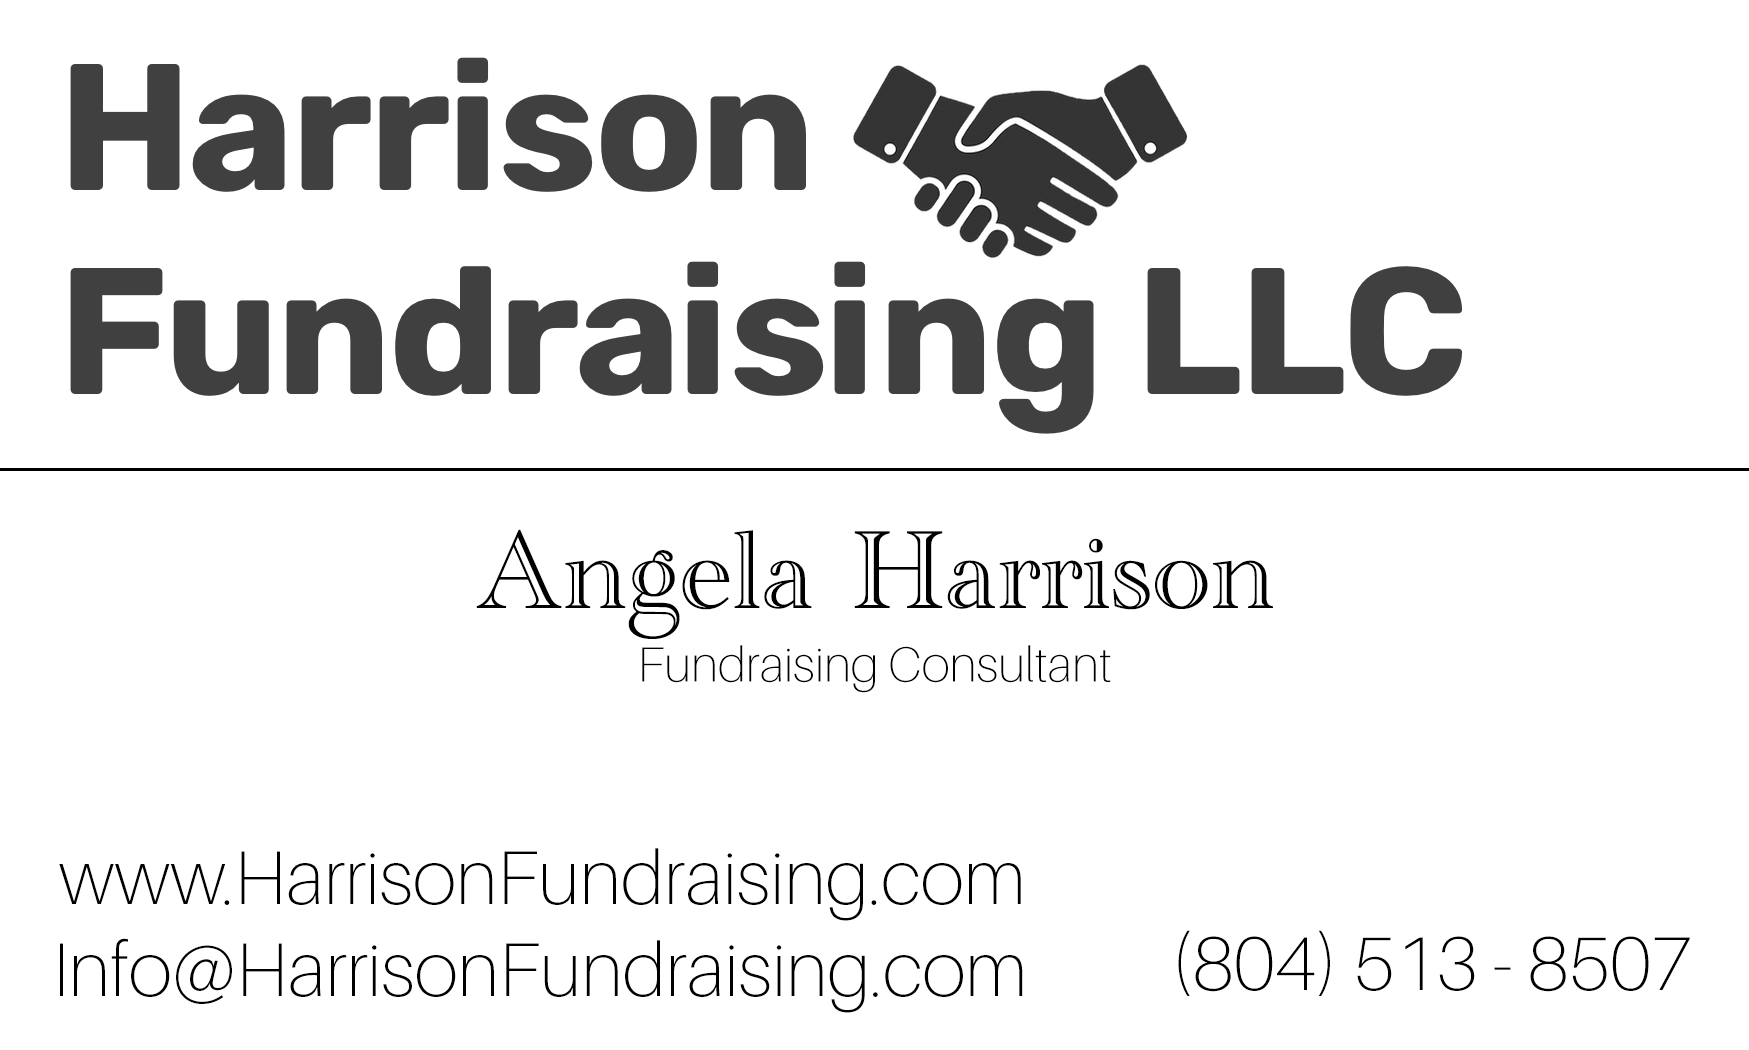 Harrison Fundraising LLC